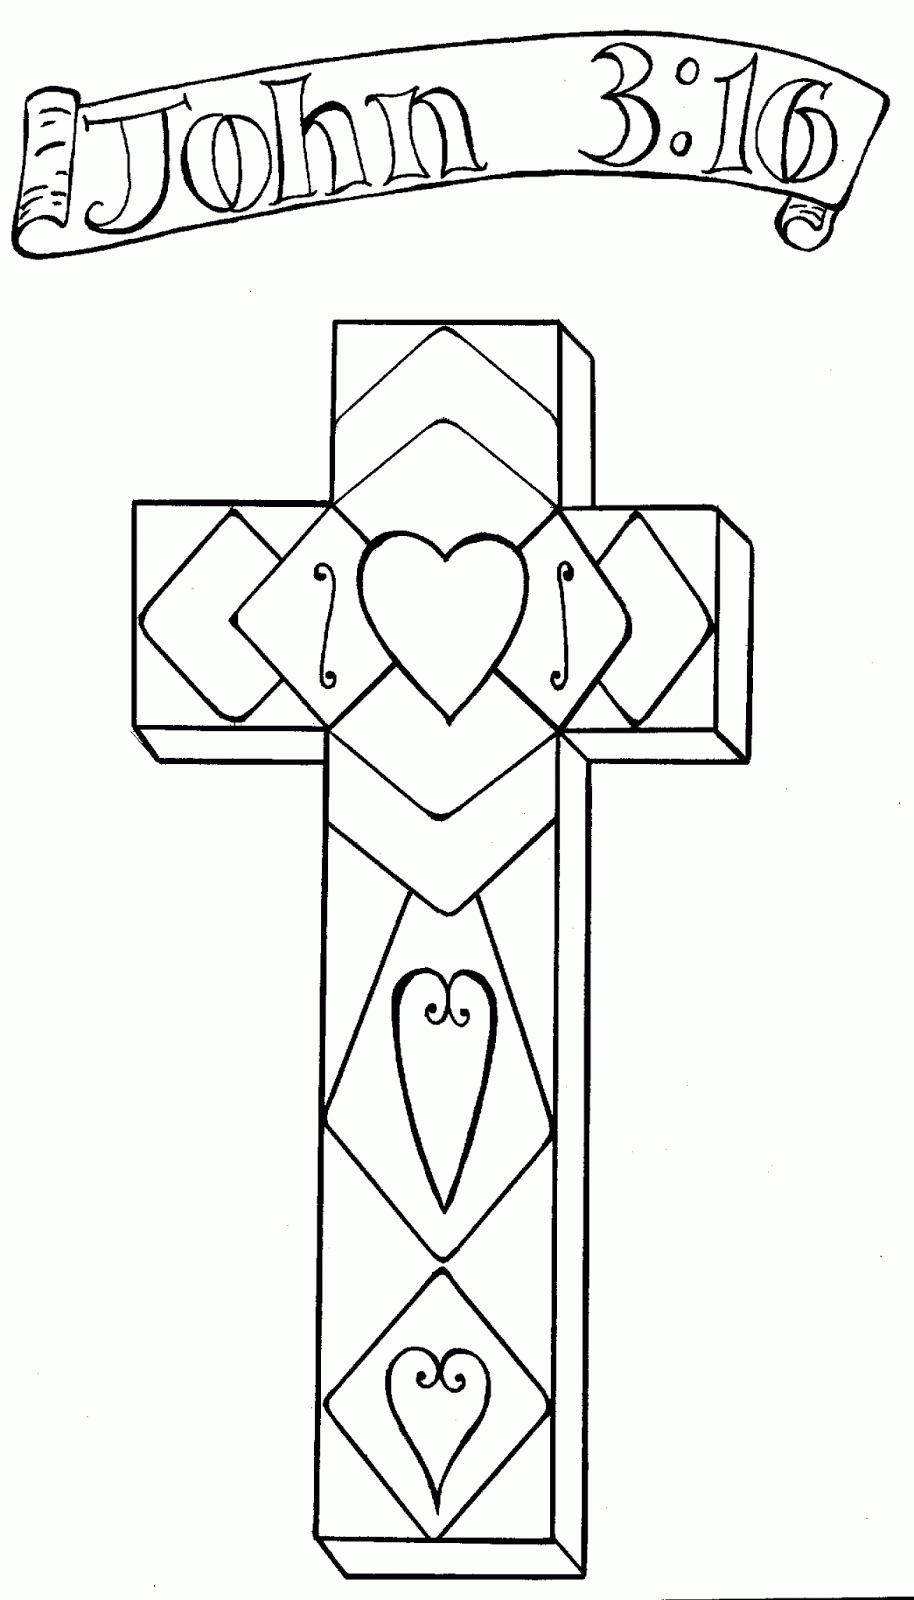 Dibujos de cruces para colorear - Imagui